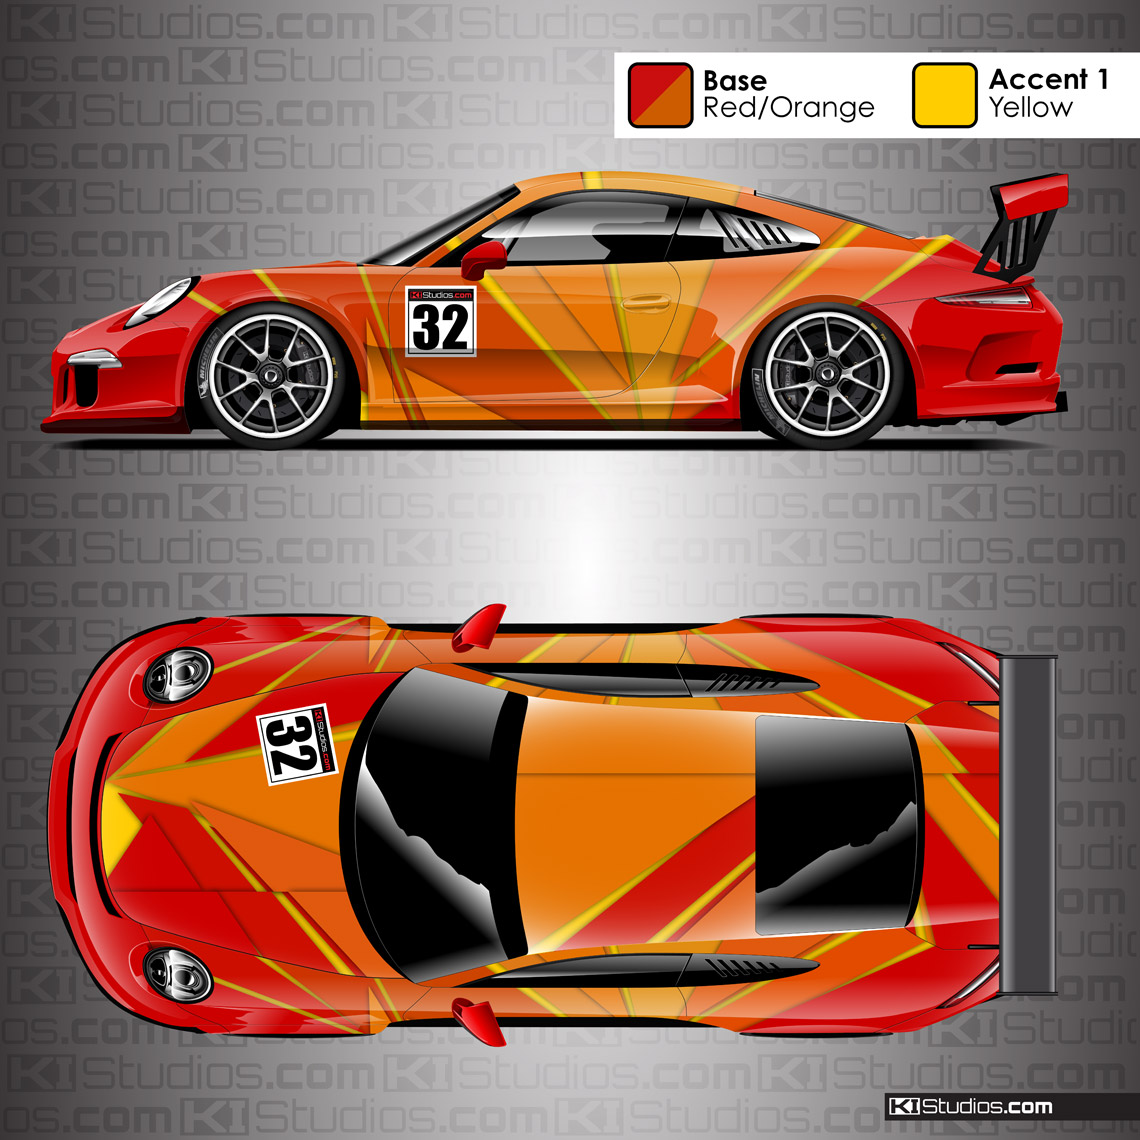 Porsche 911 Cup Racing Livery - Rift by KI Studios